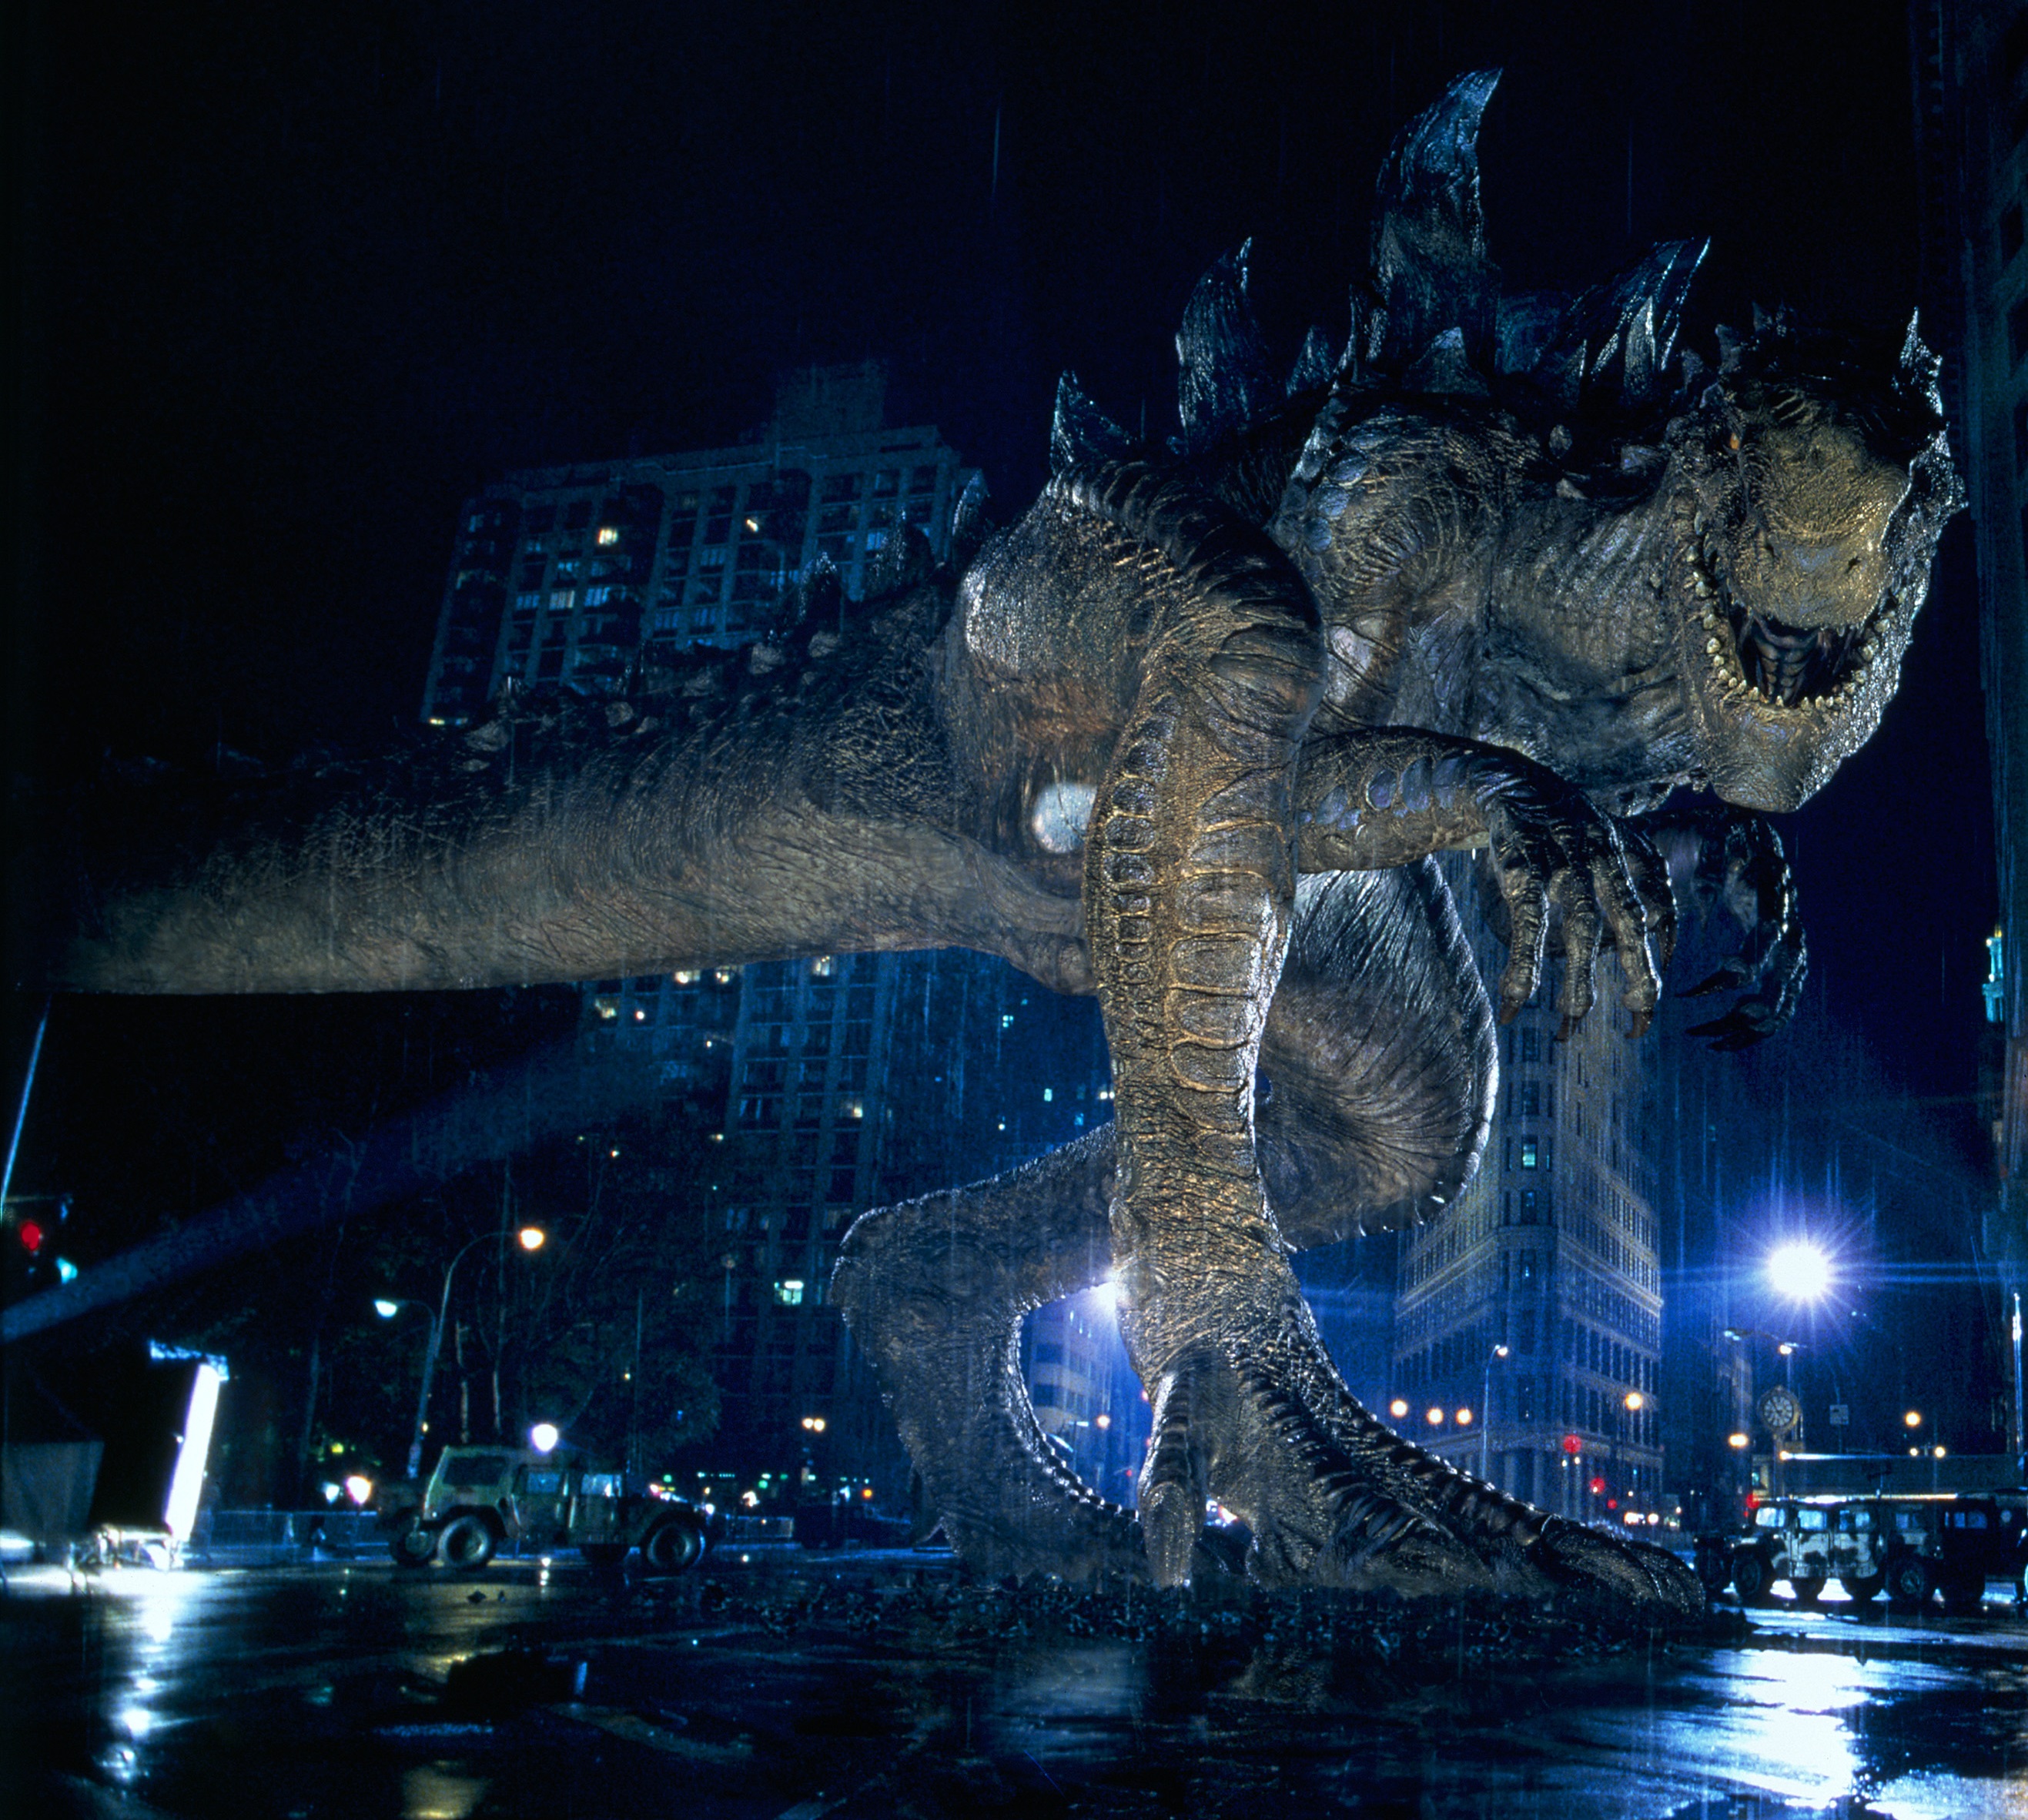 Godzilla in the city